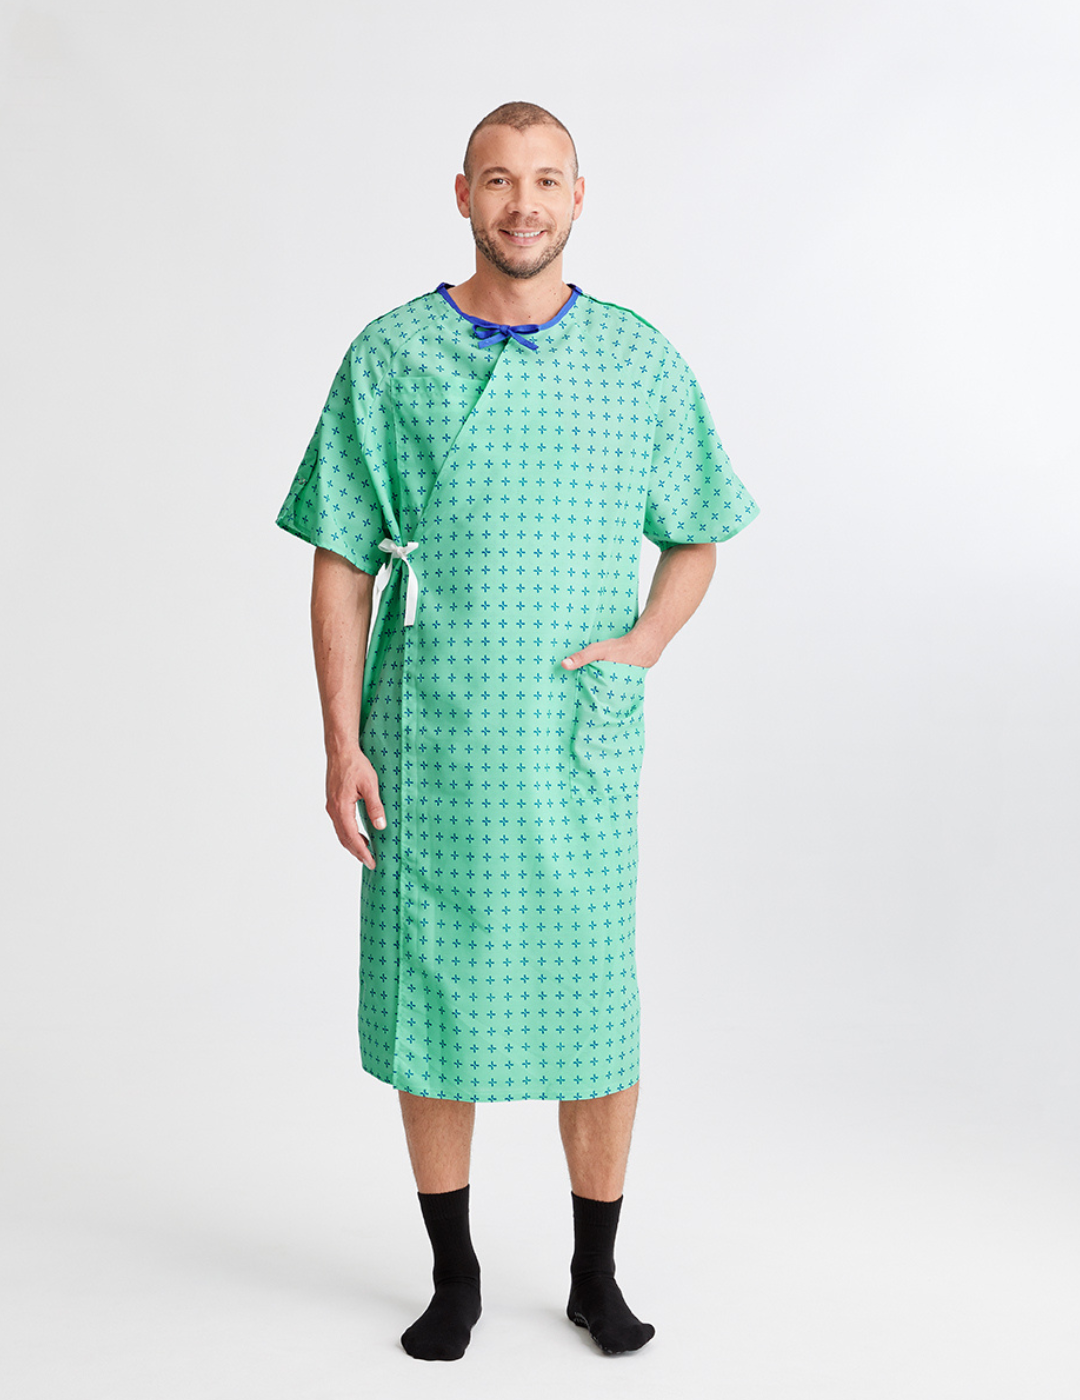 Unisex Patient Gown - Front Open - Dobby checks | Uniform Craft